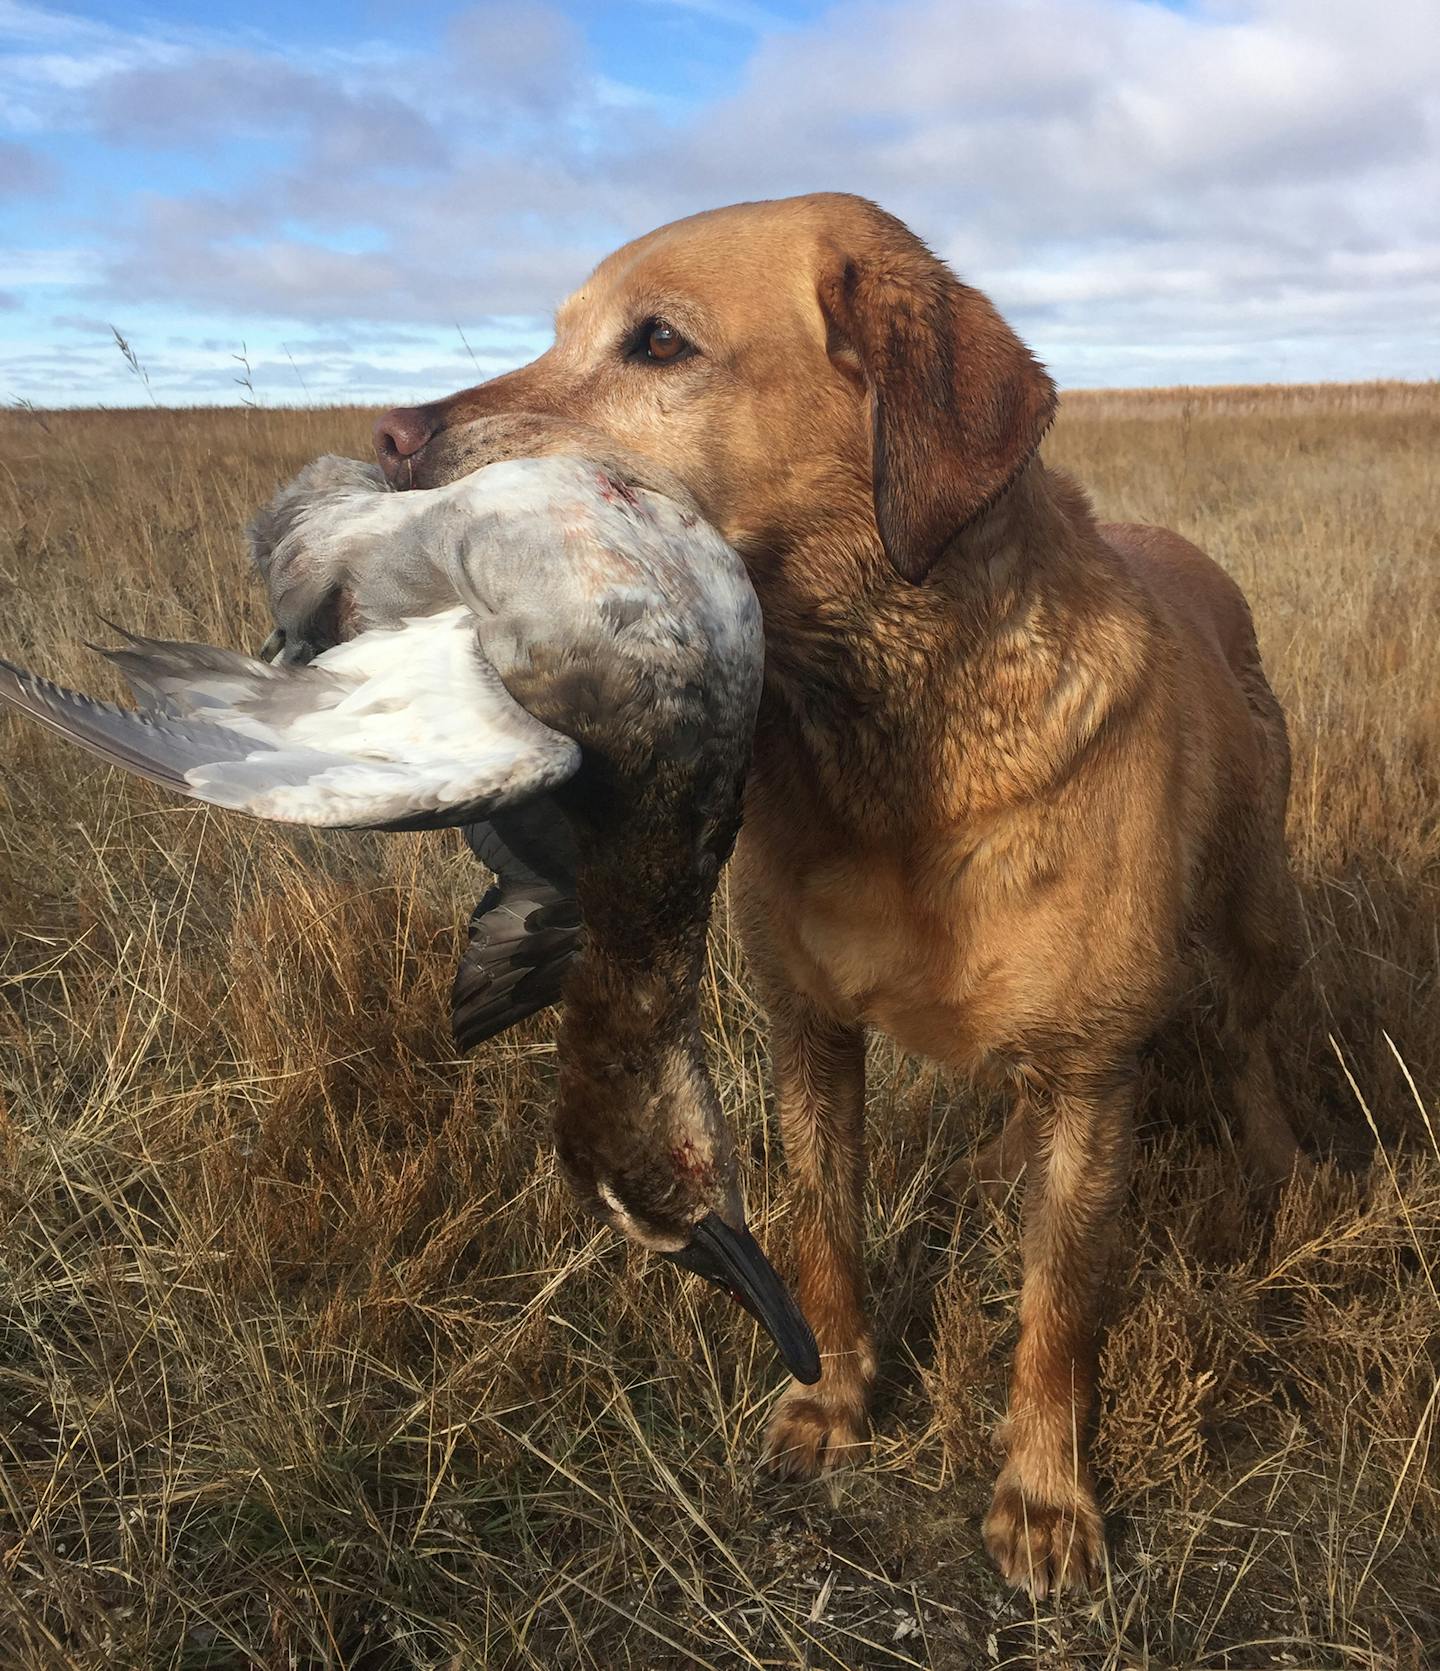 Manitoba Bird Hunting Restrictions to Limit U.S. Hunters